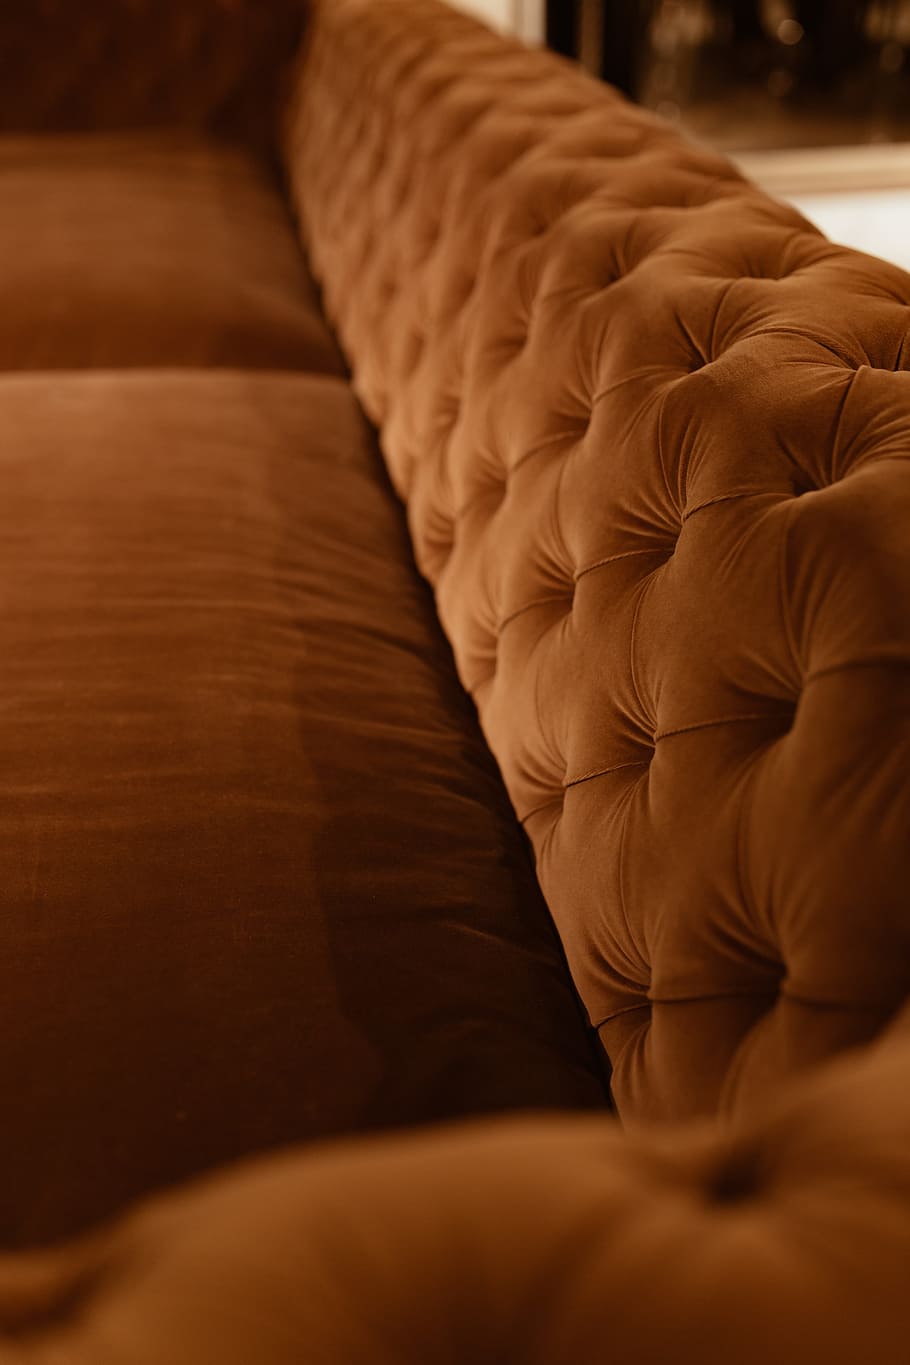 оранжевый бархат диван, диван, мебель, дом, модерн, люкс, подушки, уютно, дорого, бархат